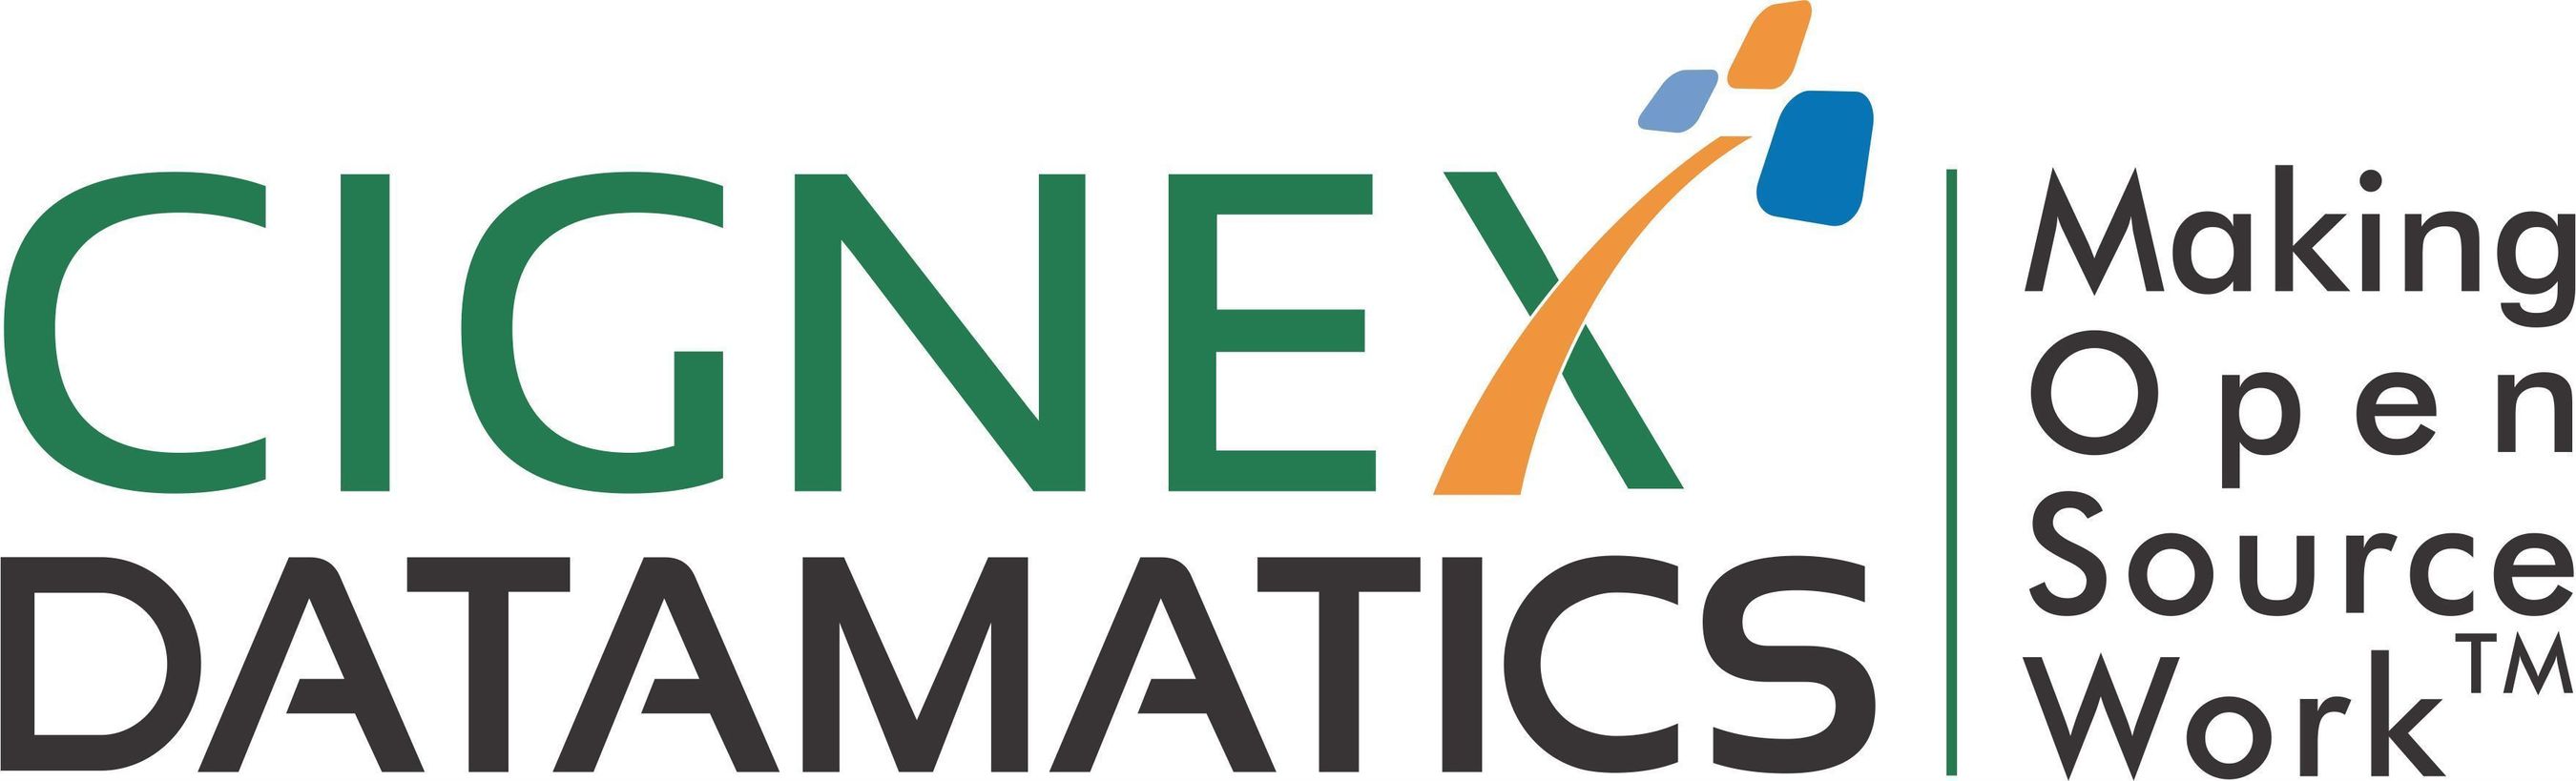 CIGNEX Datamatics Technologies Pvt Ltd Logo (PRNewsFoto/CIGNEX Datamatics Technologies)